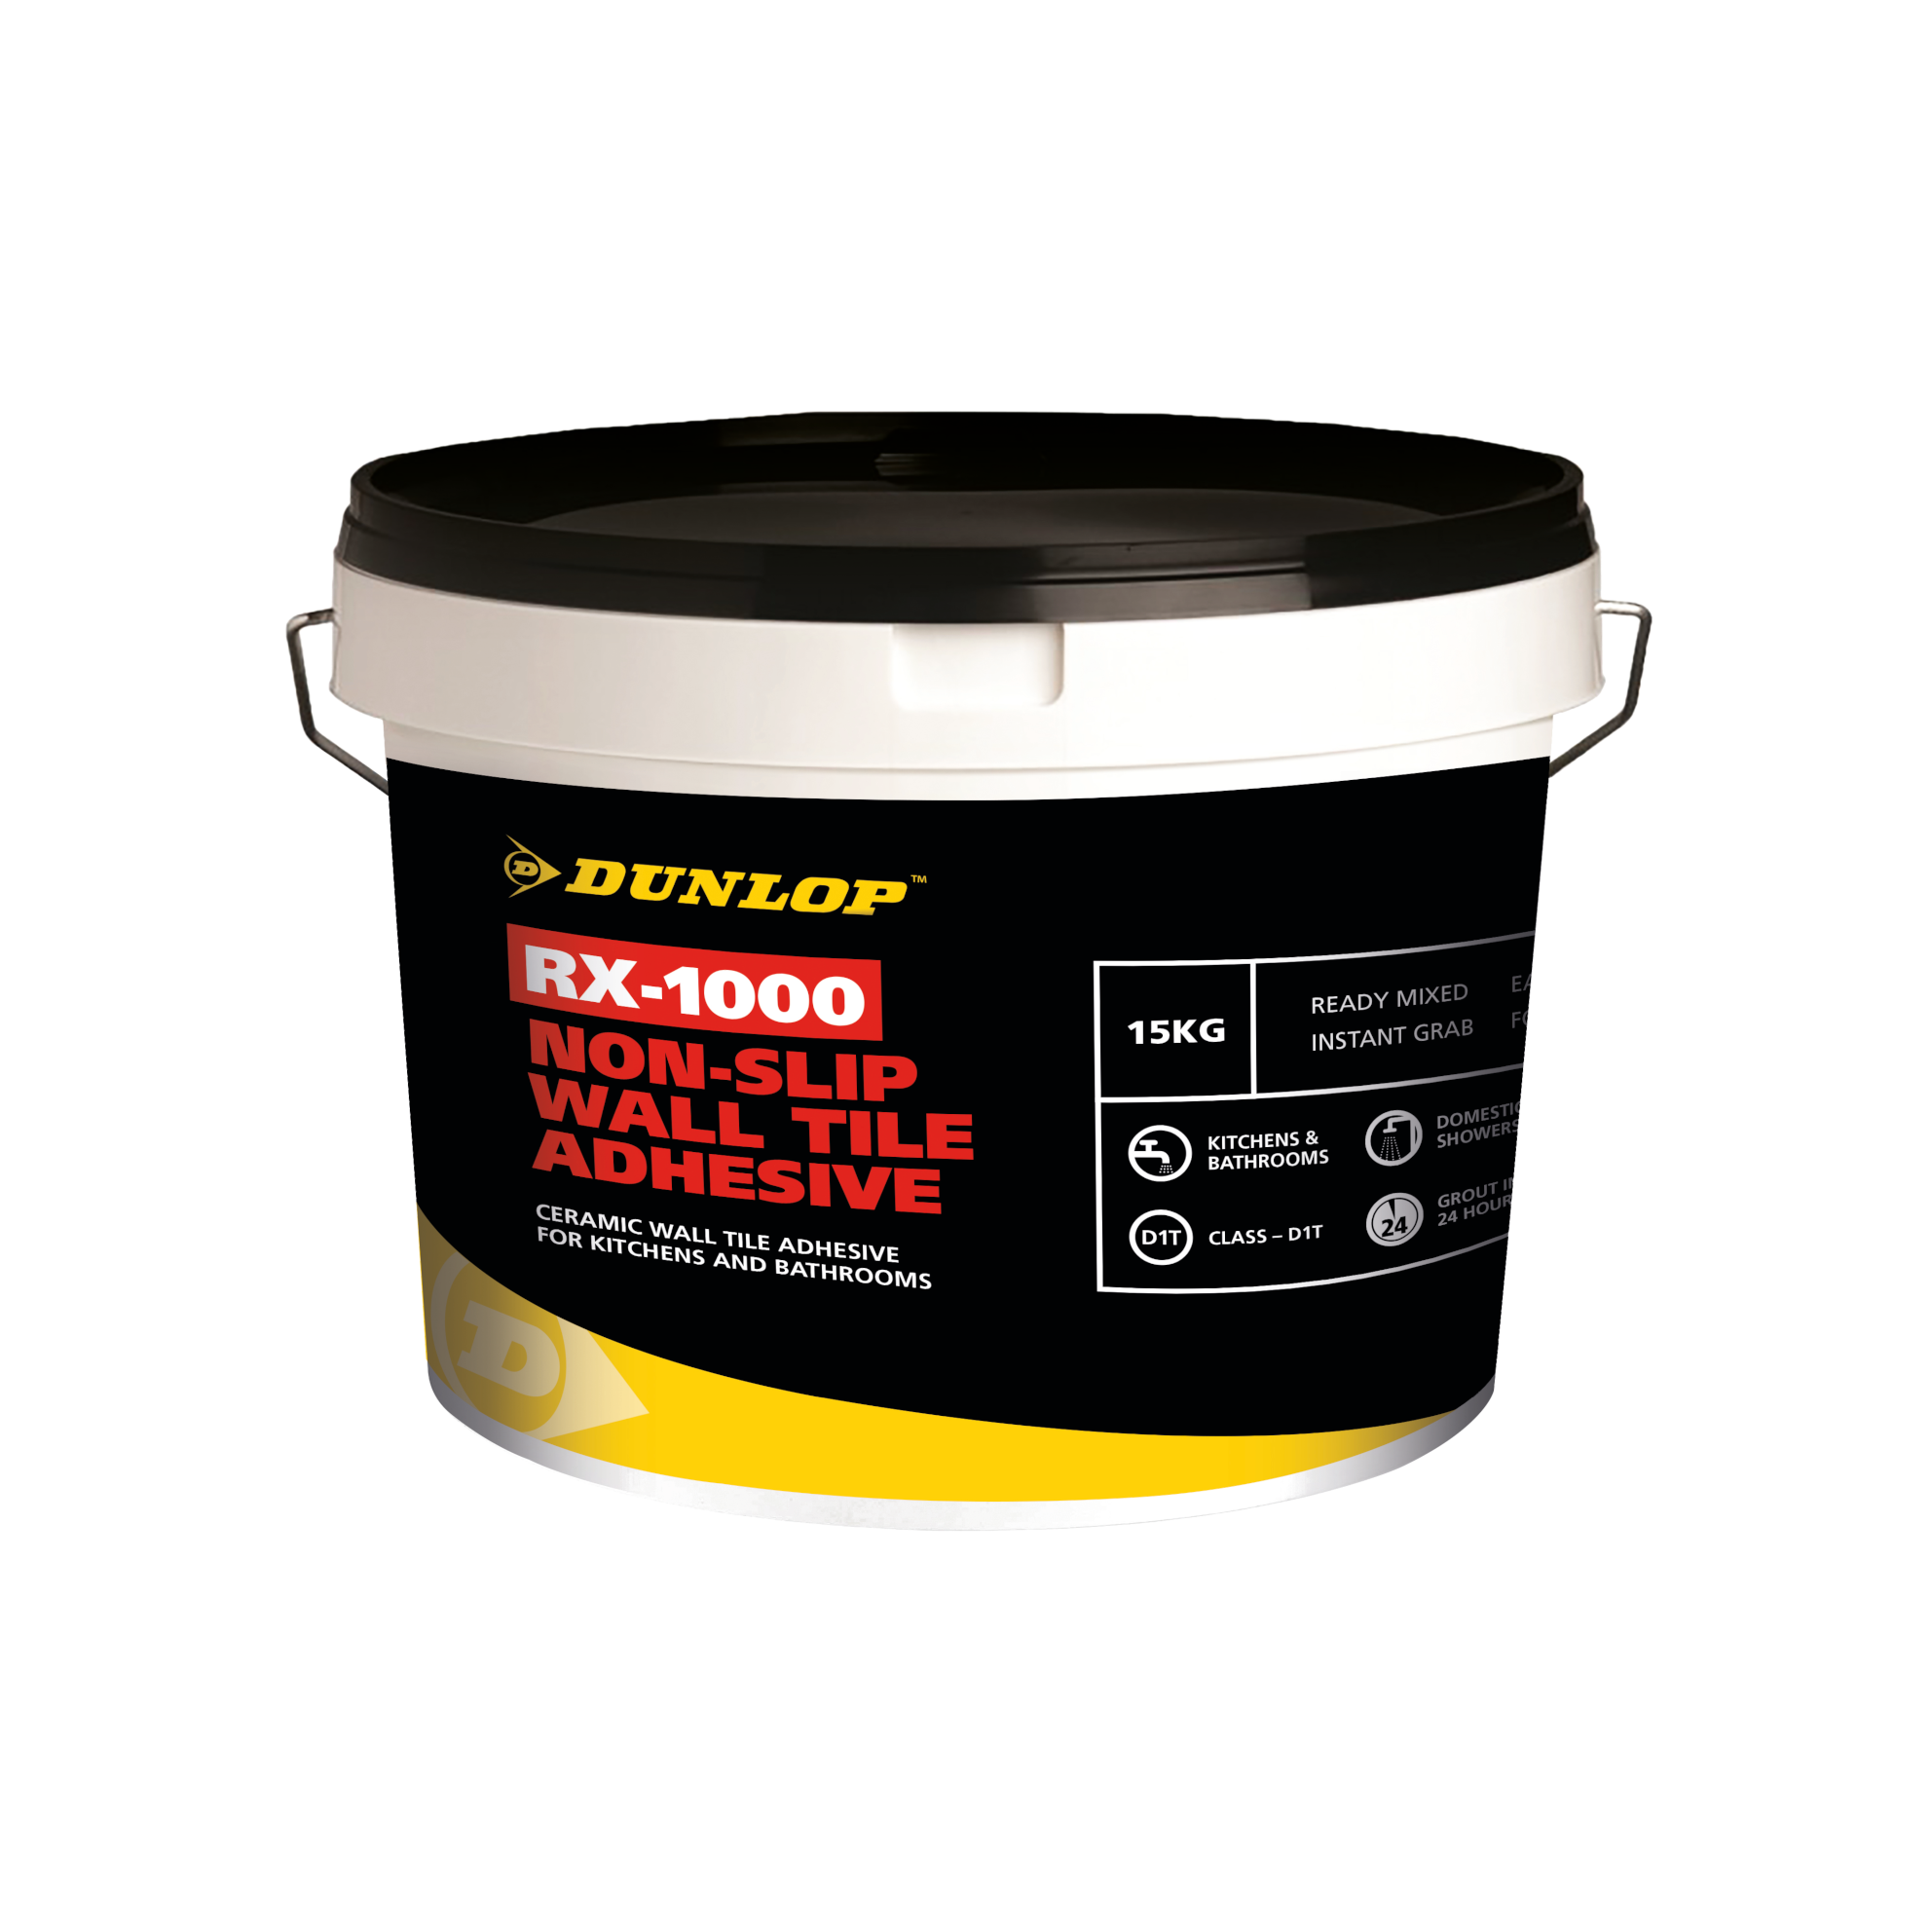 Dunlop RX-1000 Non-Slip Wall Tile Adhesive 15kg